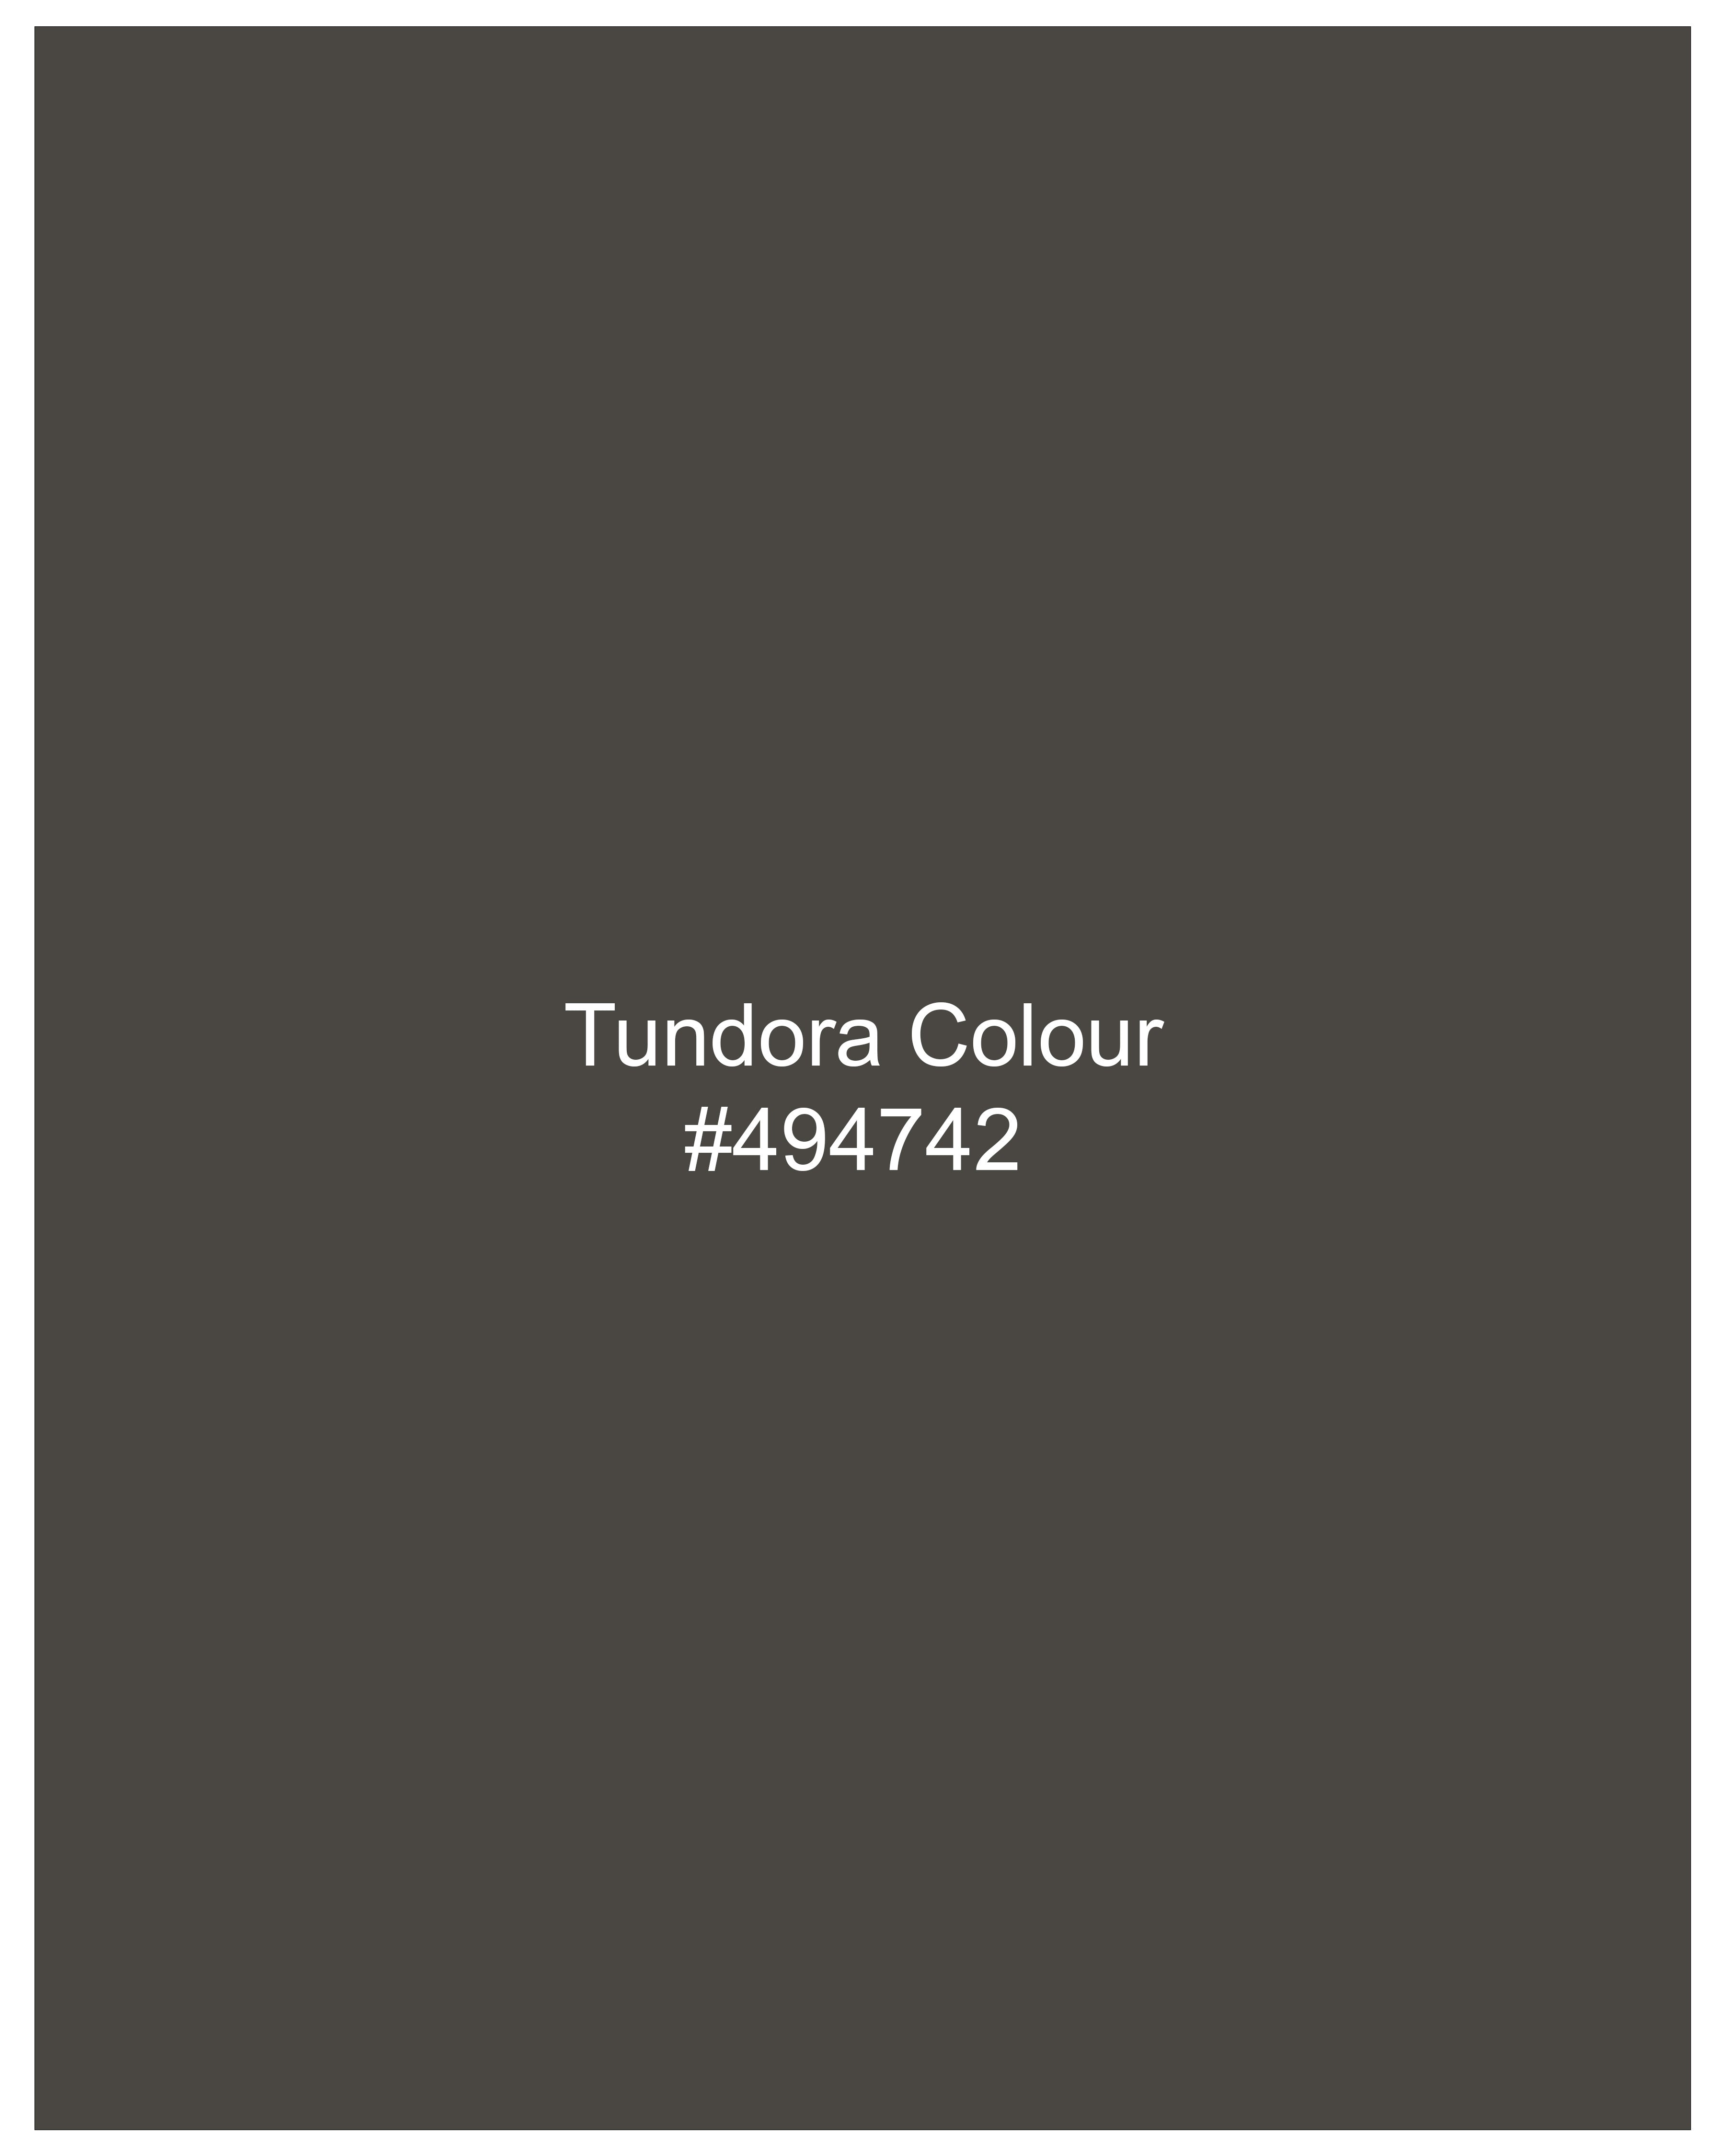 Tundora Dark Gray Subtle Plaid Waistcoat V2723-36, V2723-38, V2723-40, V2723-42, V2723-44, V2723-46, V2723-48, V2723-50, V2723-52, V2723-54, V2723-56, V2723-58, V2723-60